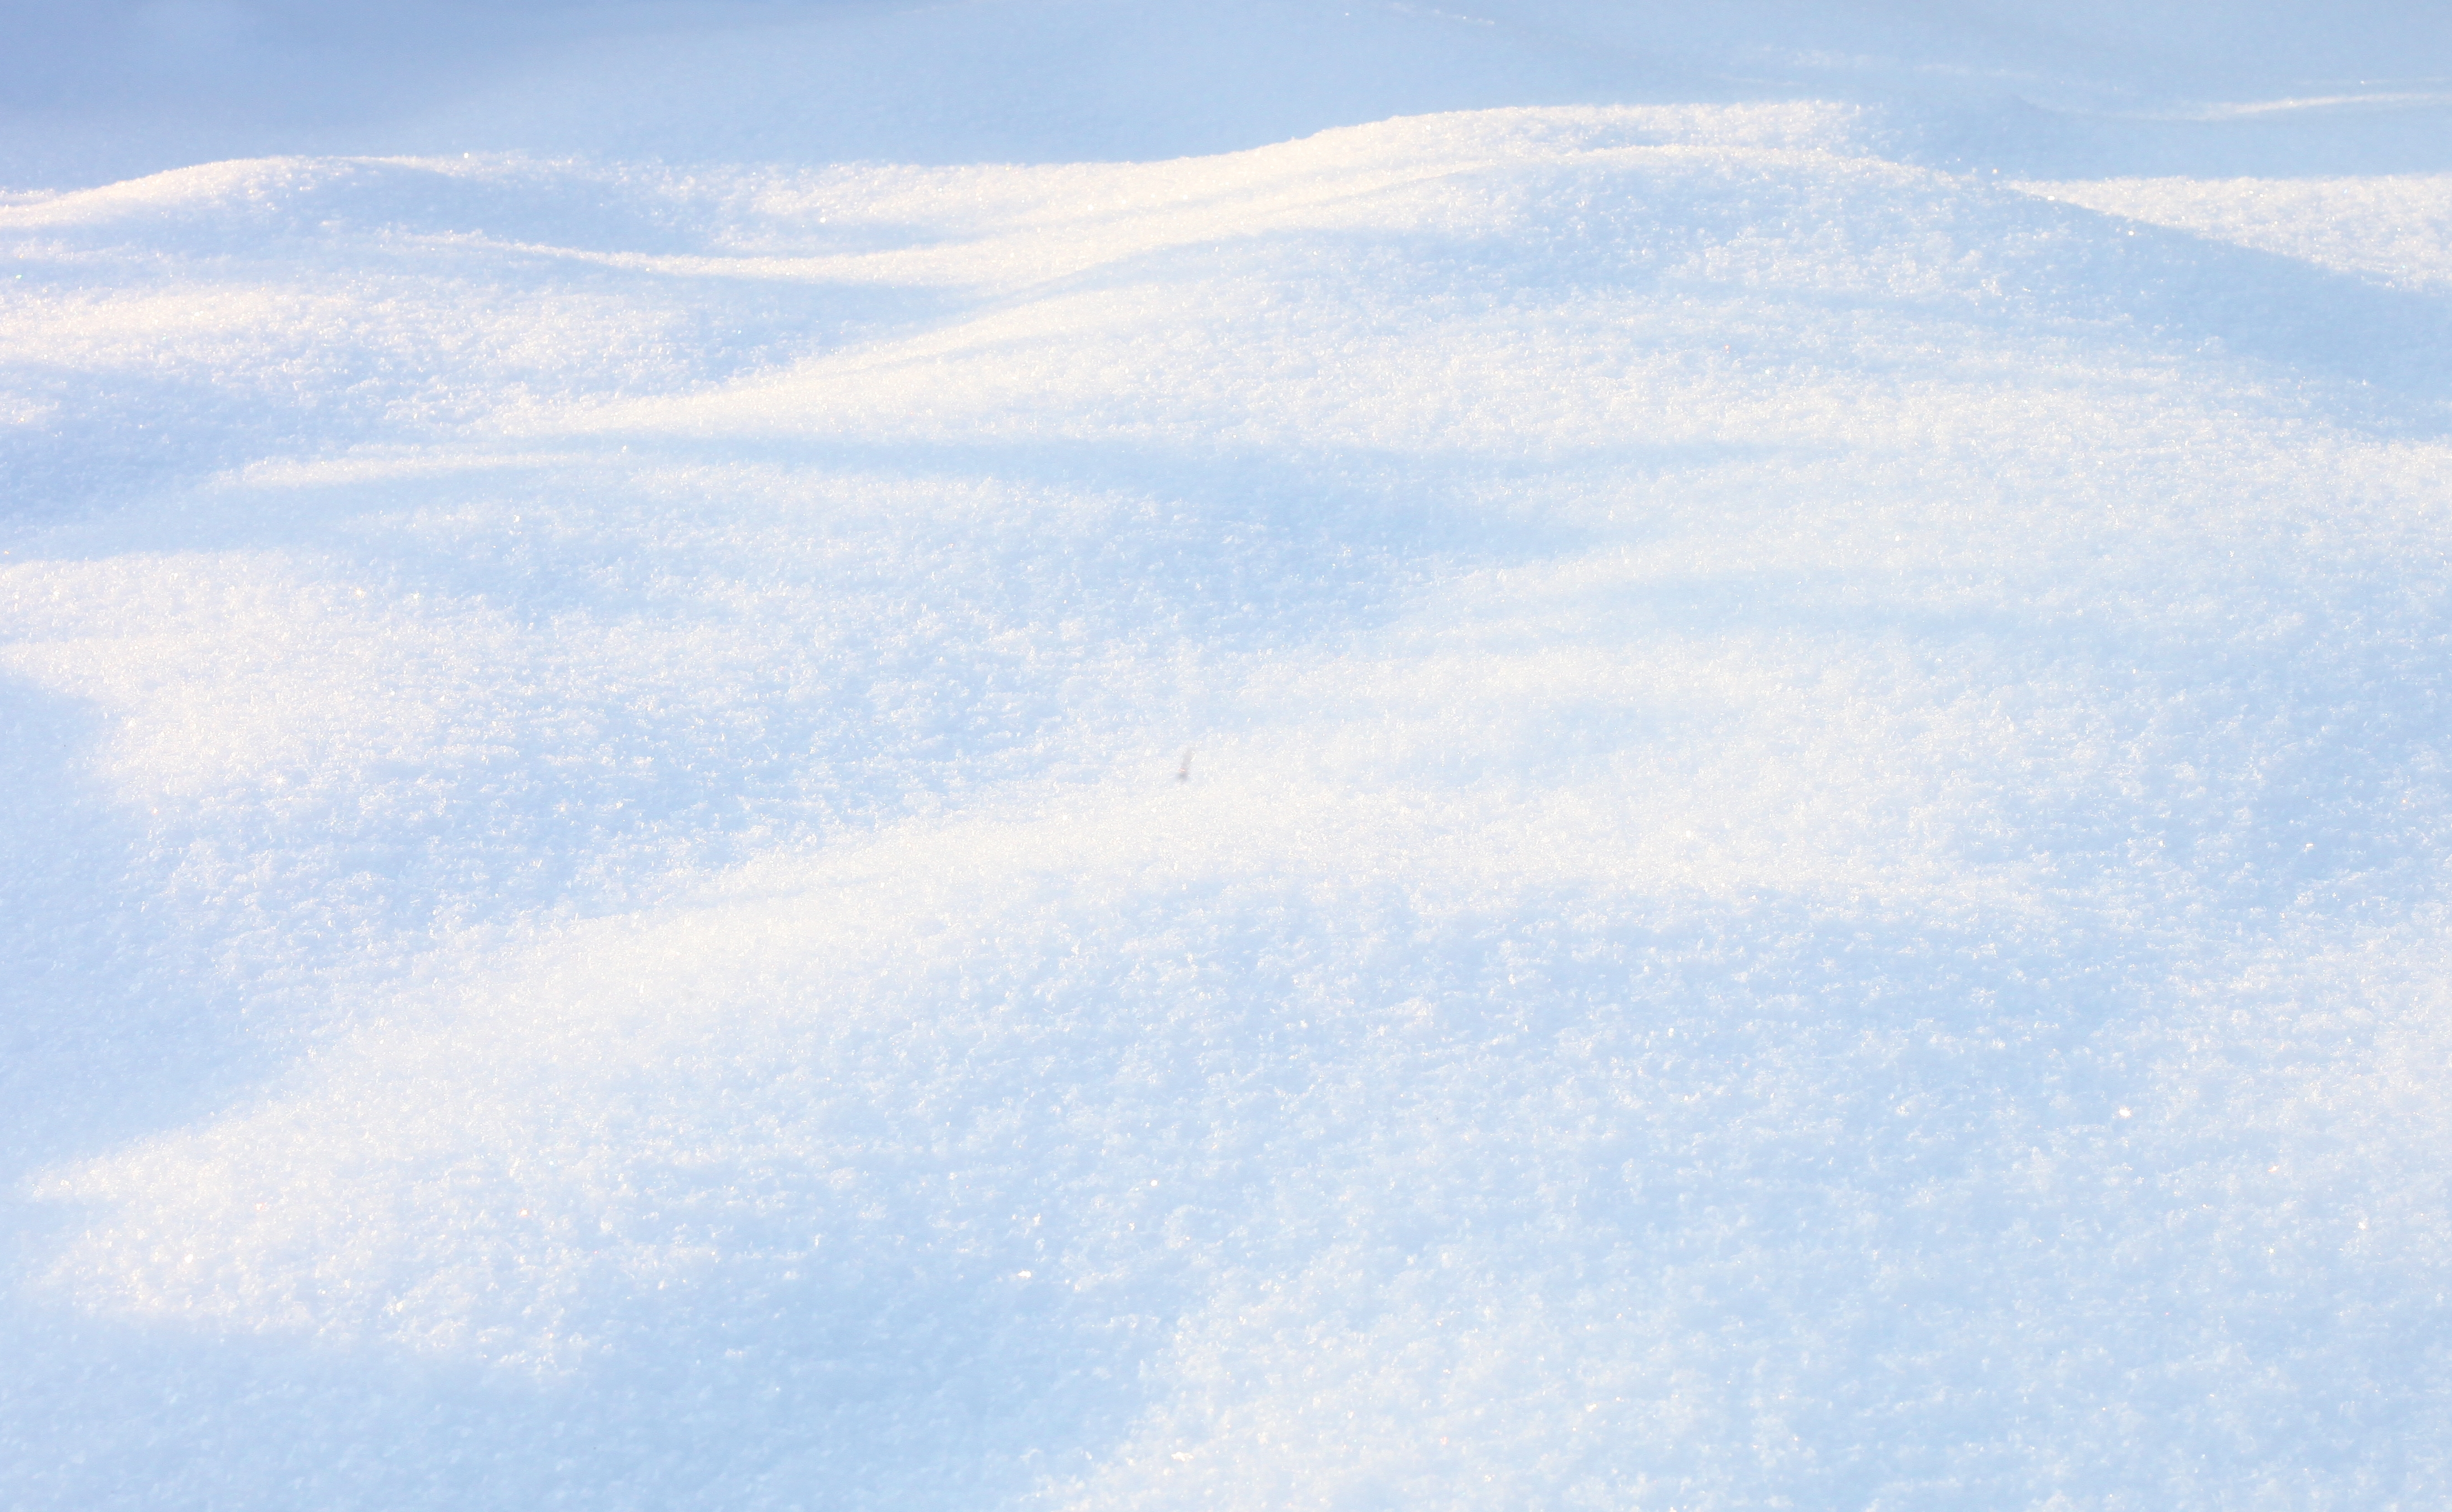 God's creation: snowy landscape, December 2012, picture 2